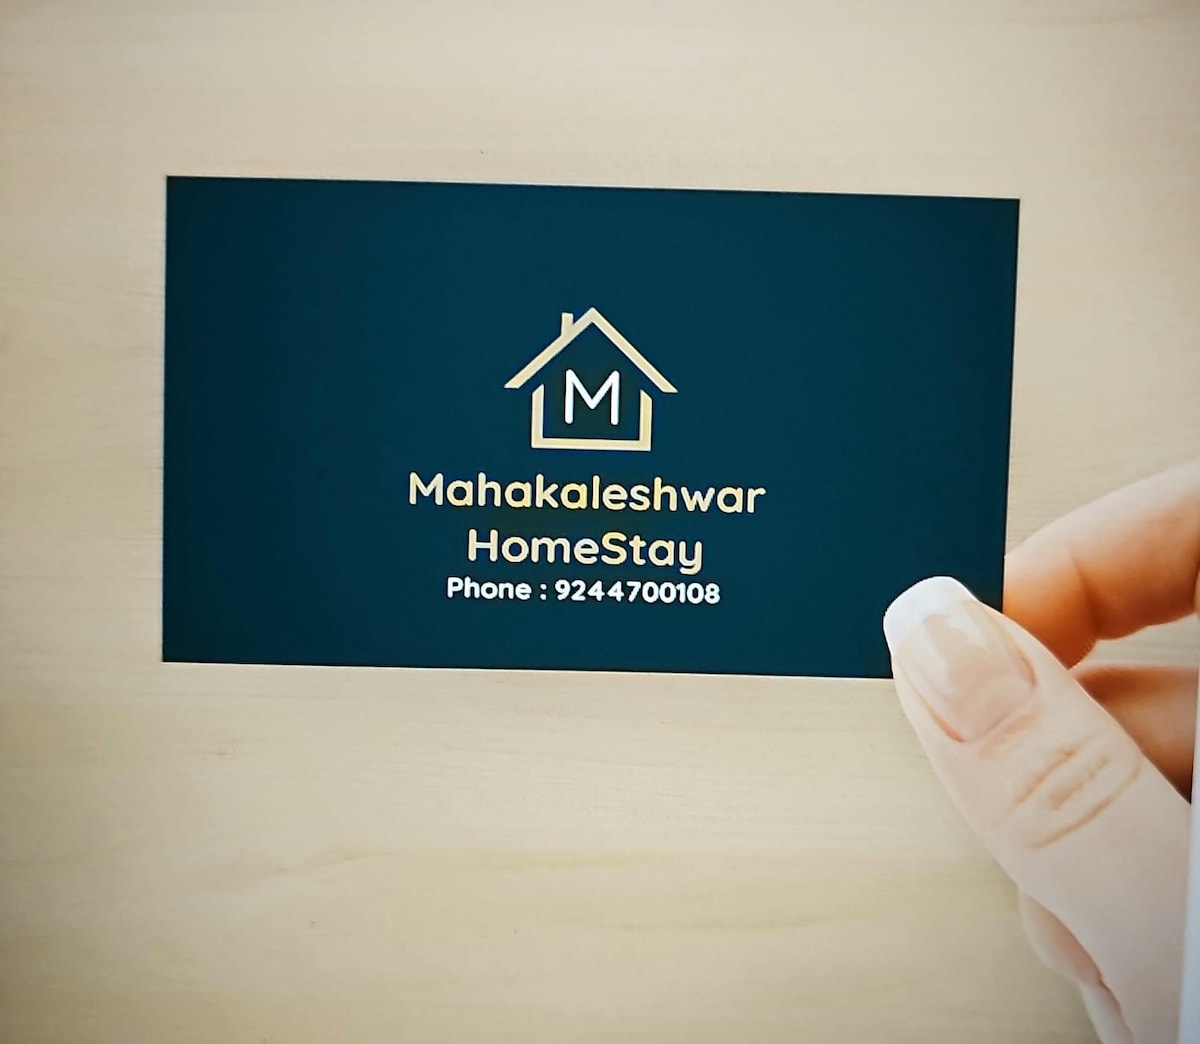 Mahakaleshwar homestay